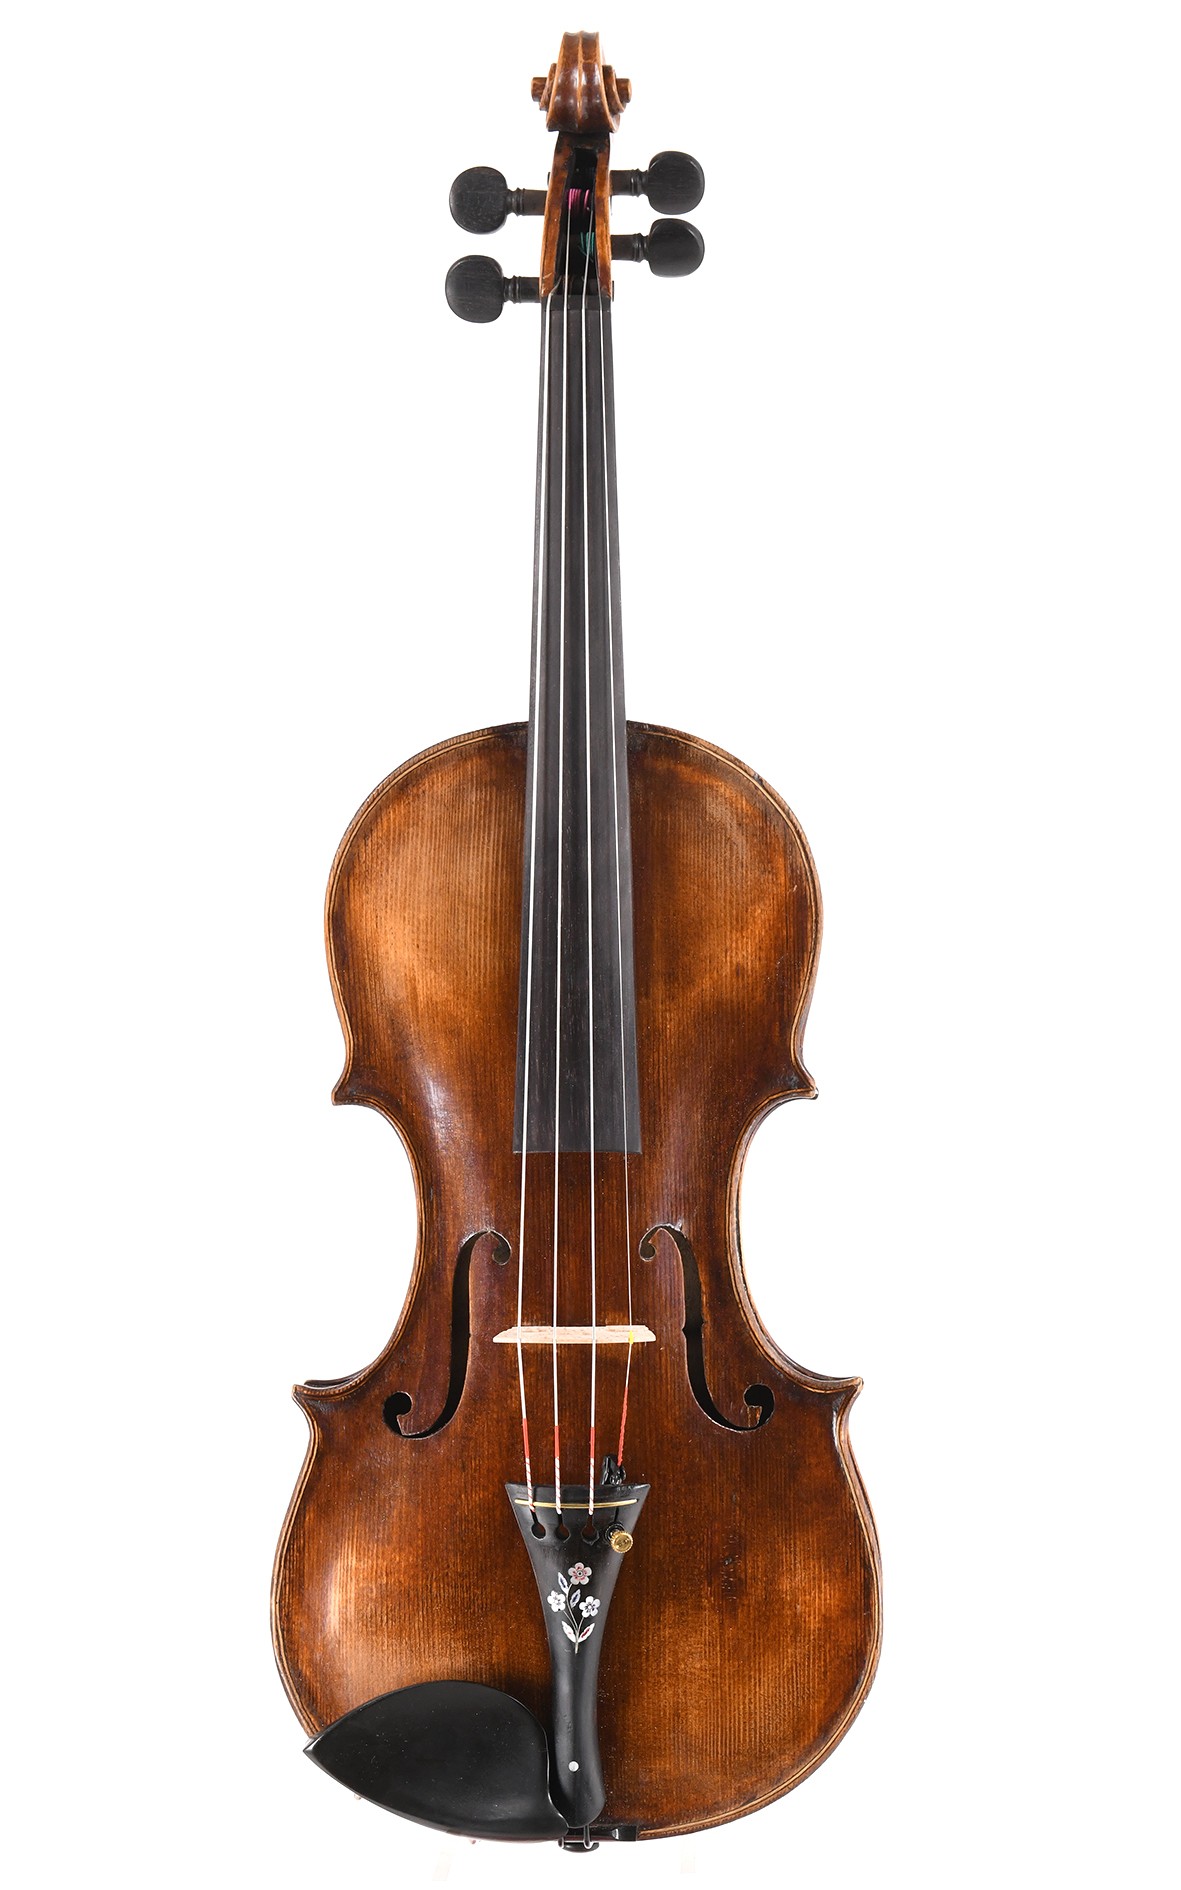 Vogtland master violin by Johann Gottfried Hamm